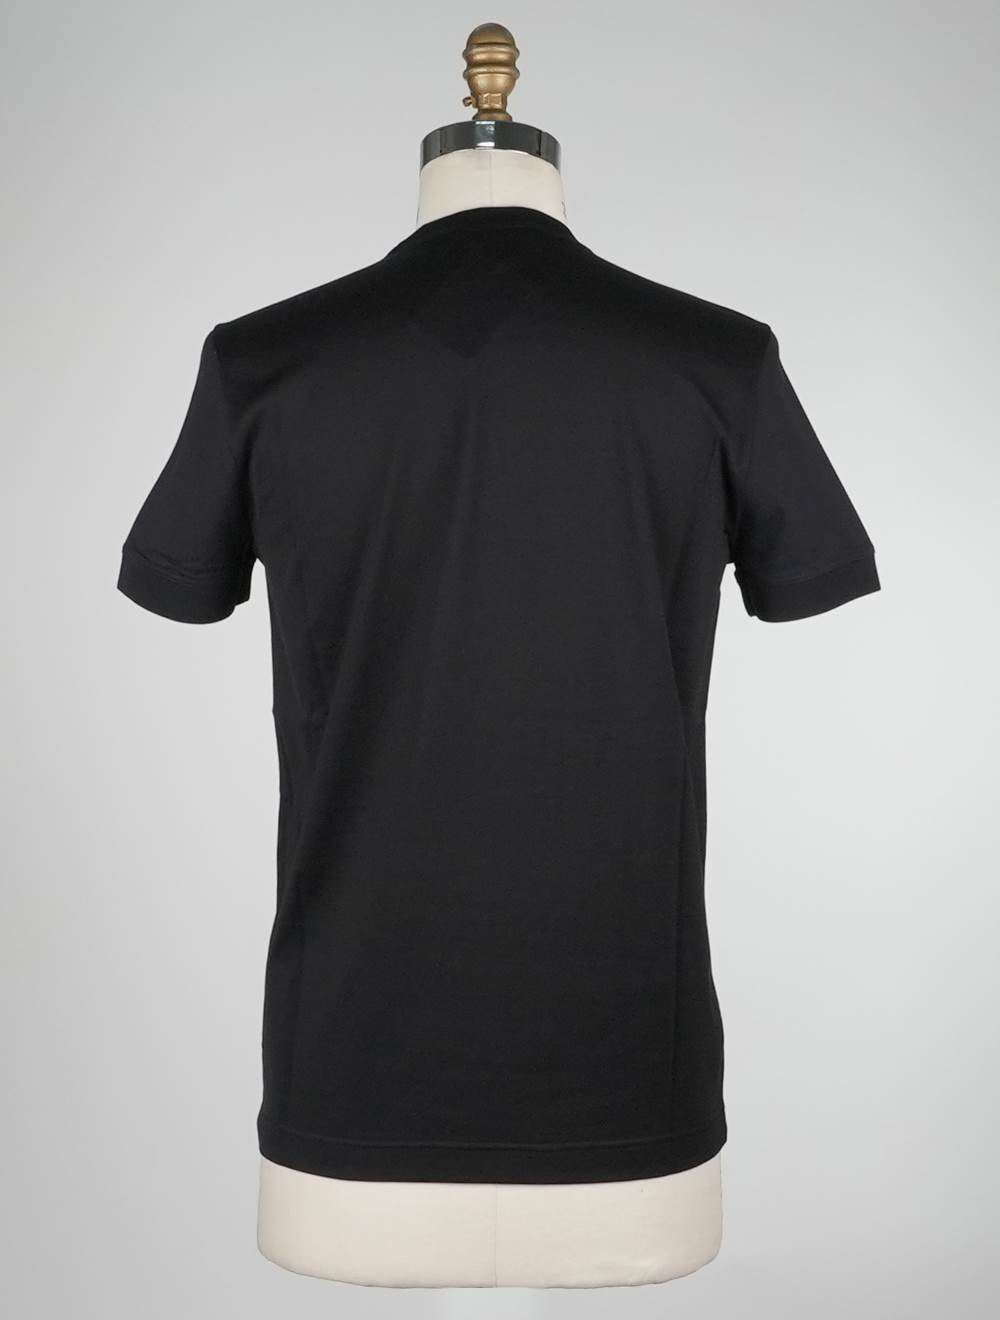 Knt קיטי שחור חולצת טריקו מהדורה מיוחדת מיוחדת